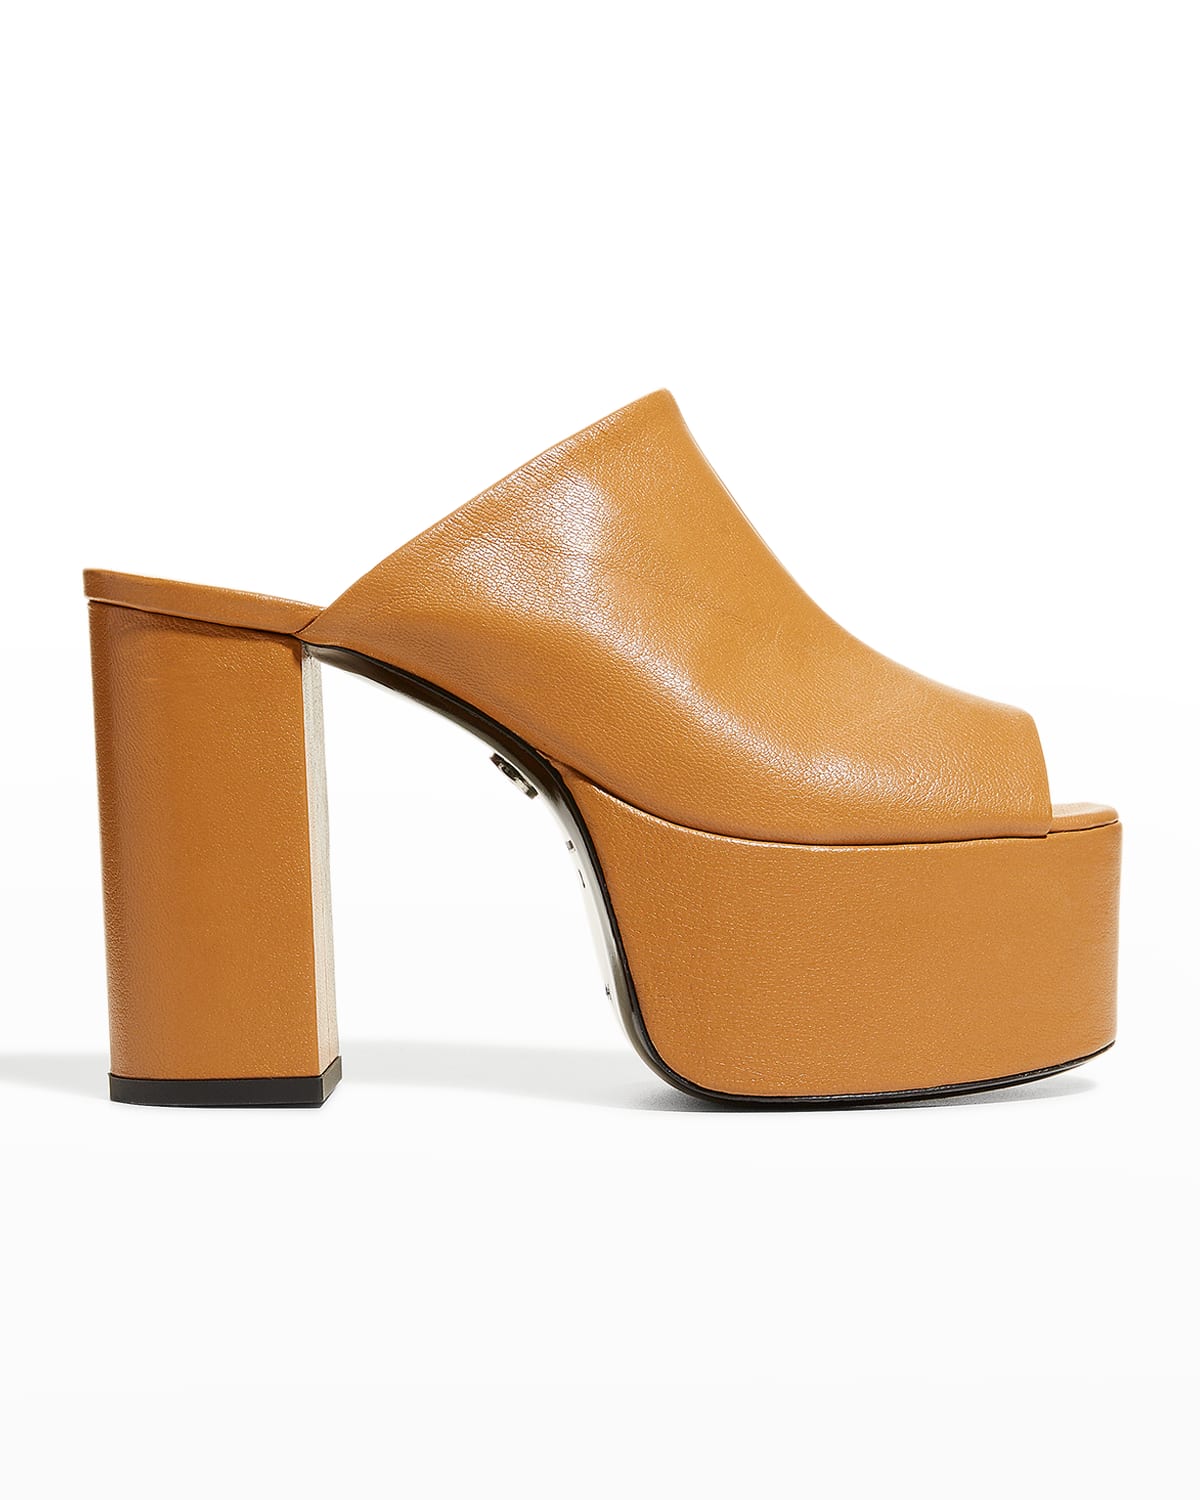 SIMON MILLER Shoes for Women | ModeSens